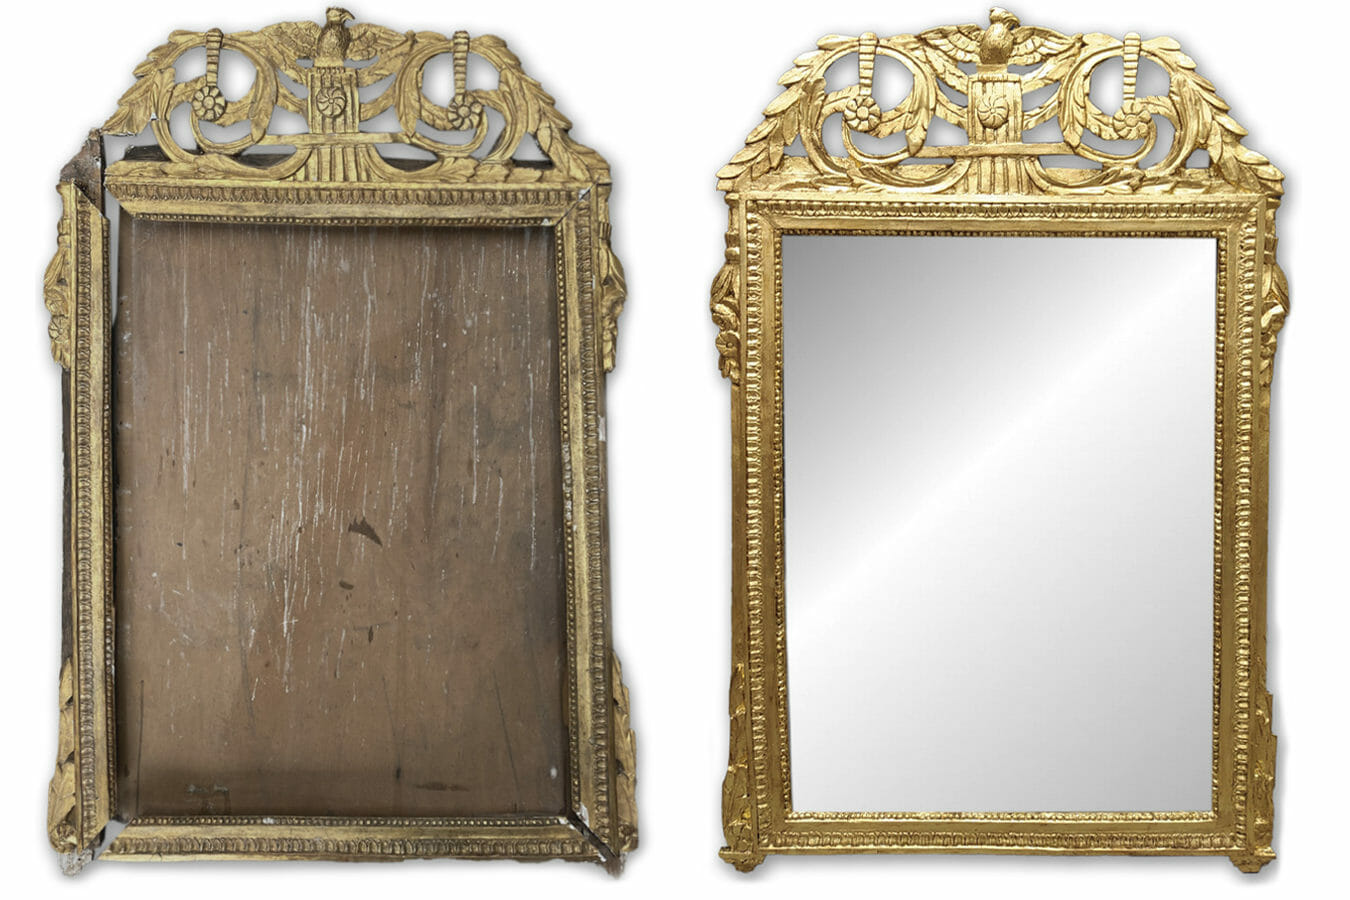 Small mirror example